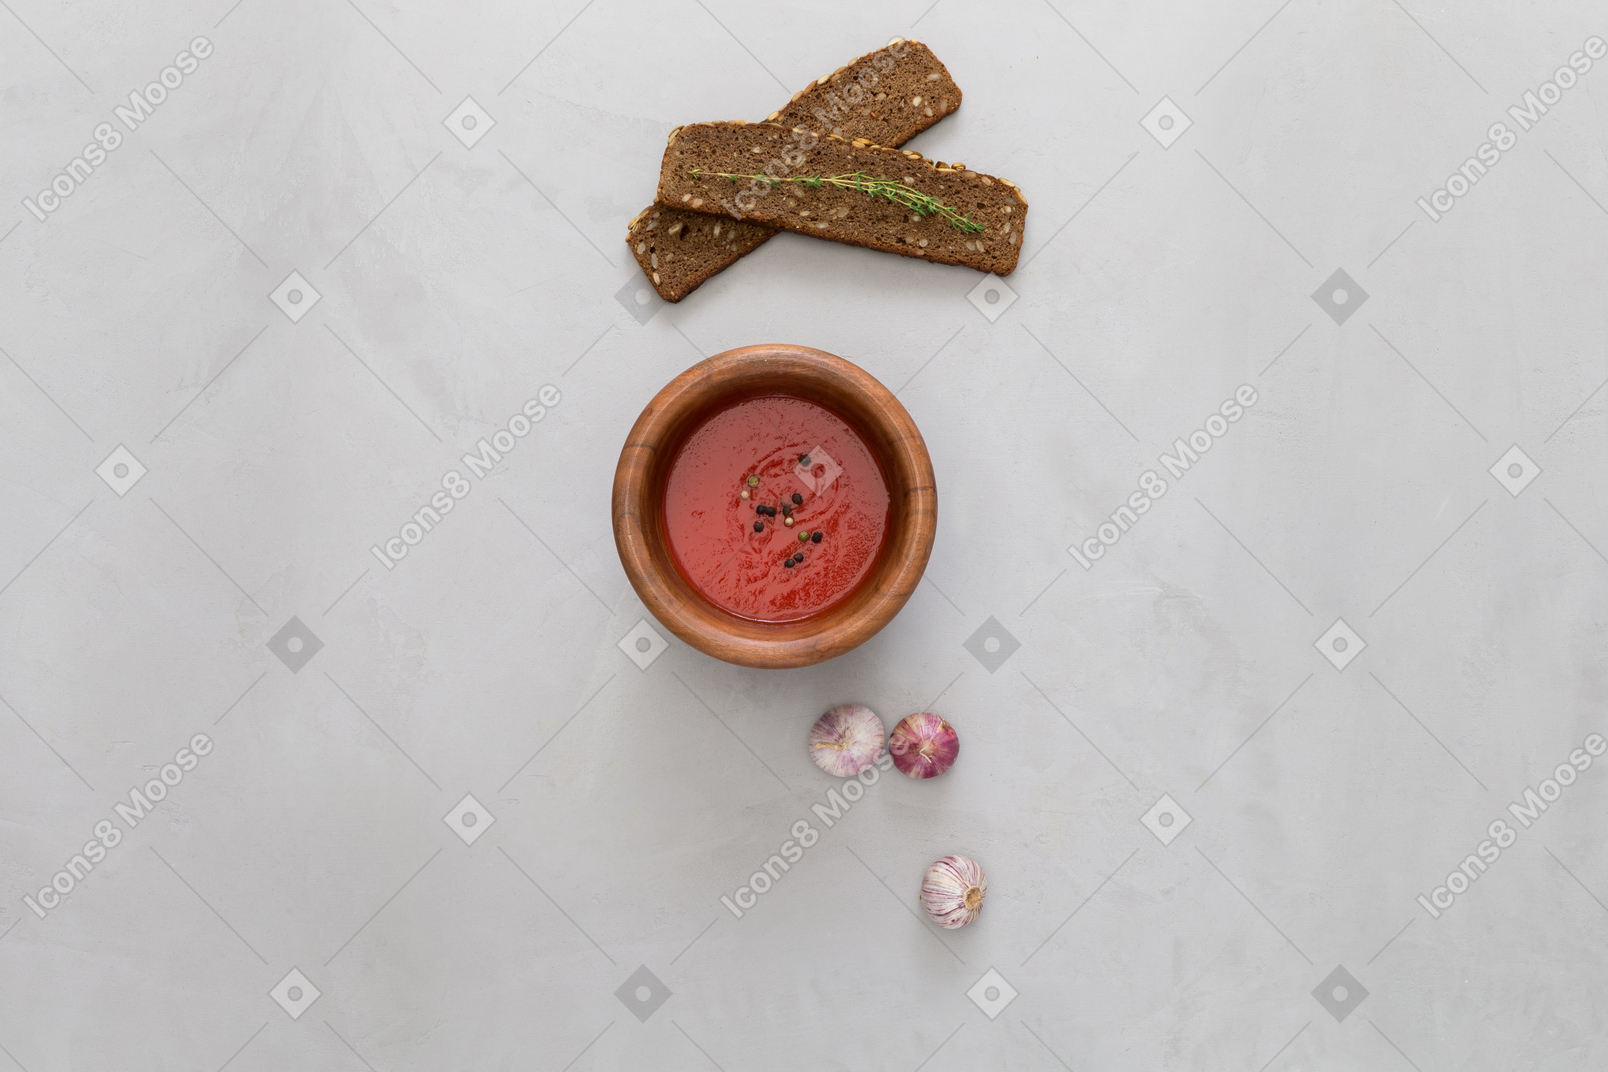 Tomato sauce, snacks and garlic